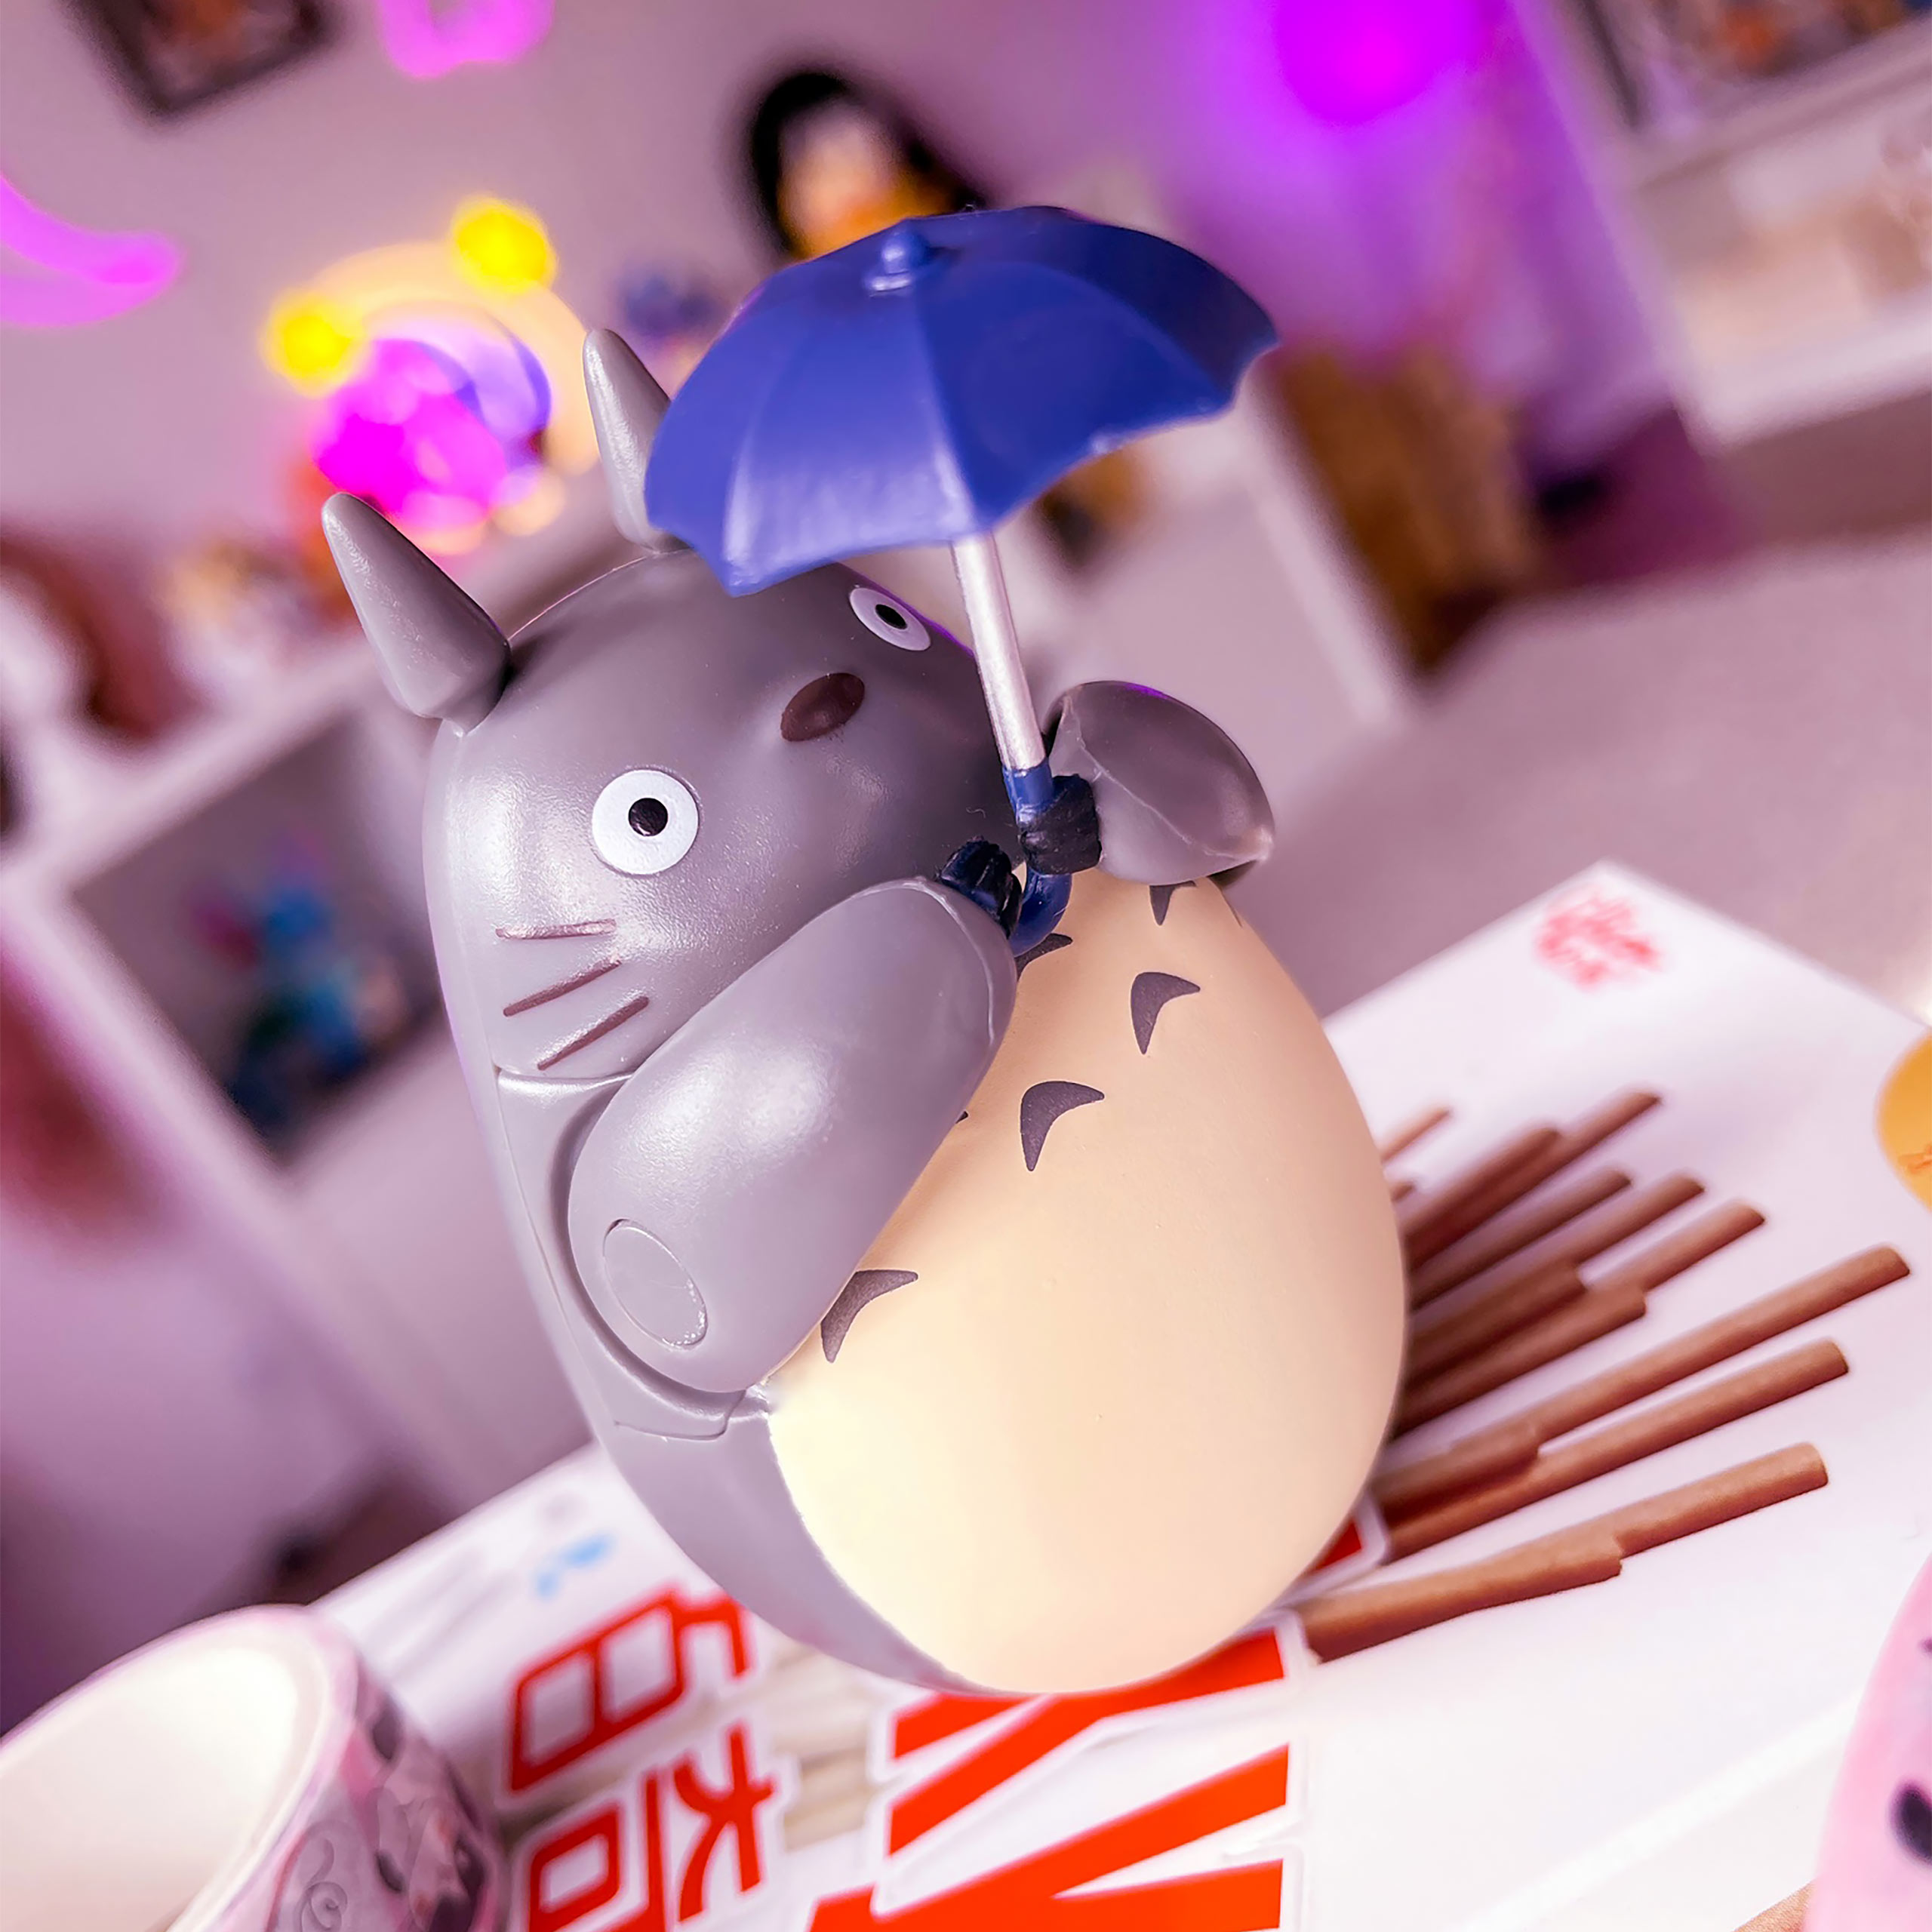 Totoro - Miminzuku Oh-Totoro Roly-Poly Figure with Umbrella